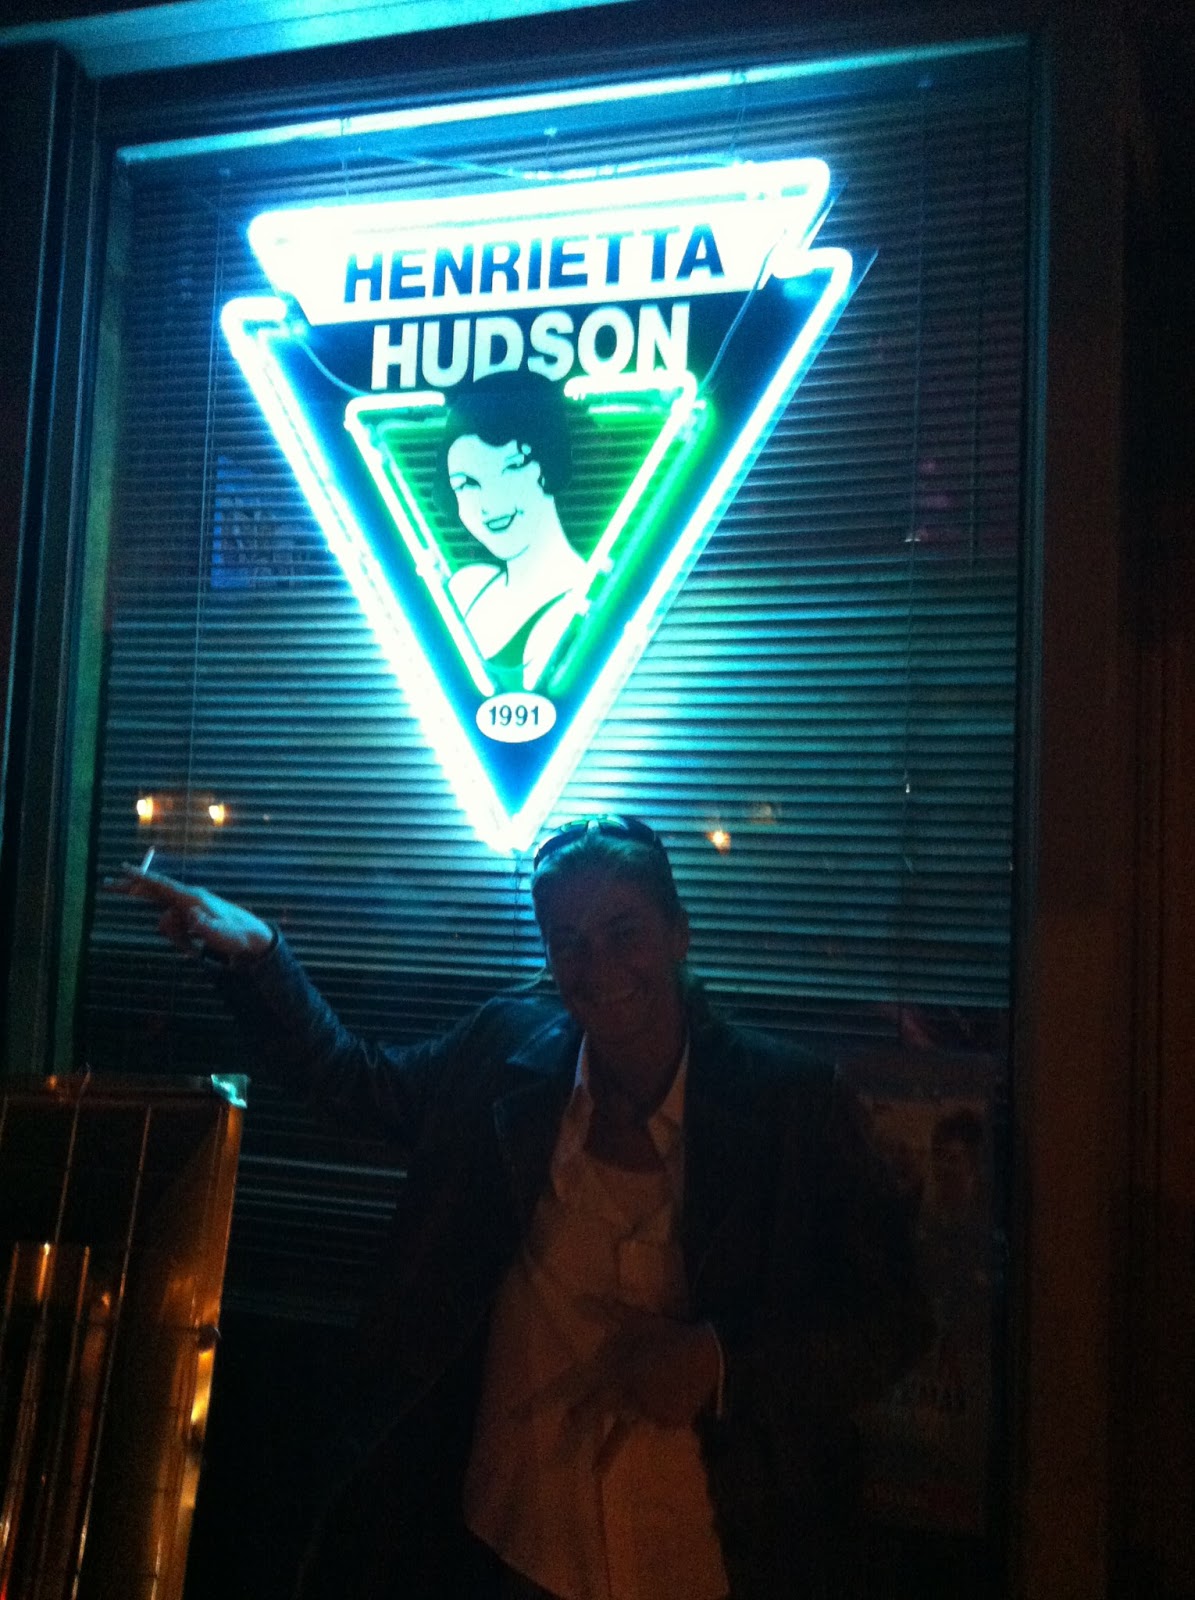 Photo of Henrietta Hudson in New York City, New York, United States - 9 Picture of Point of interest, Establishment, Bar